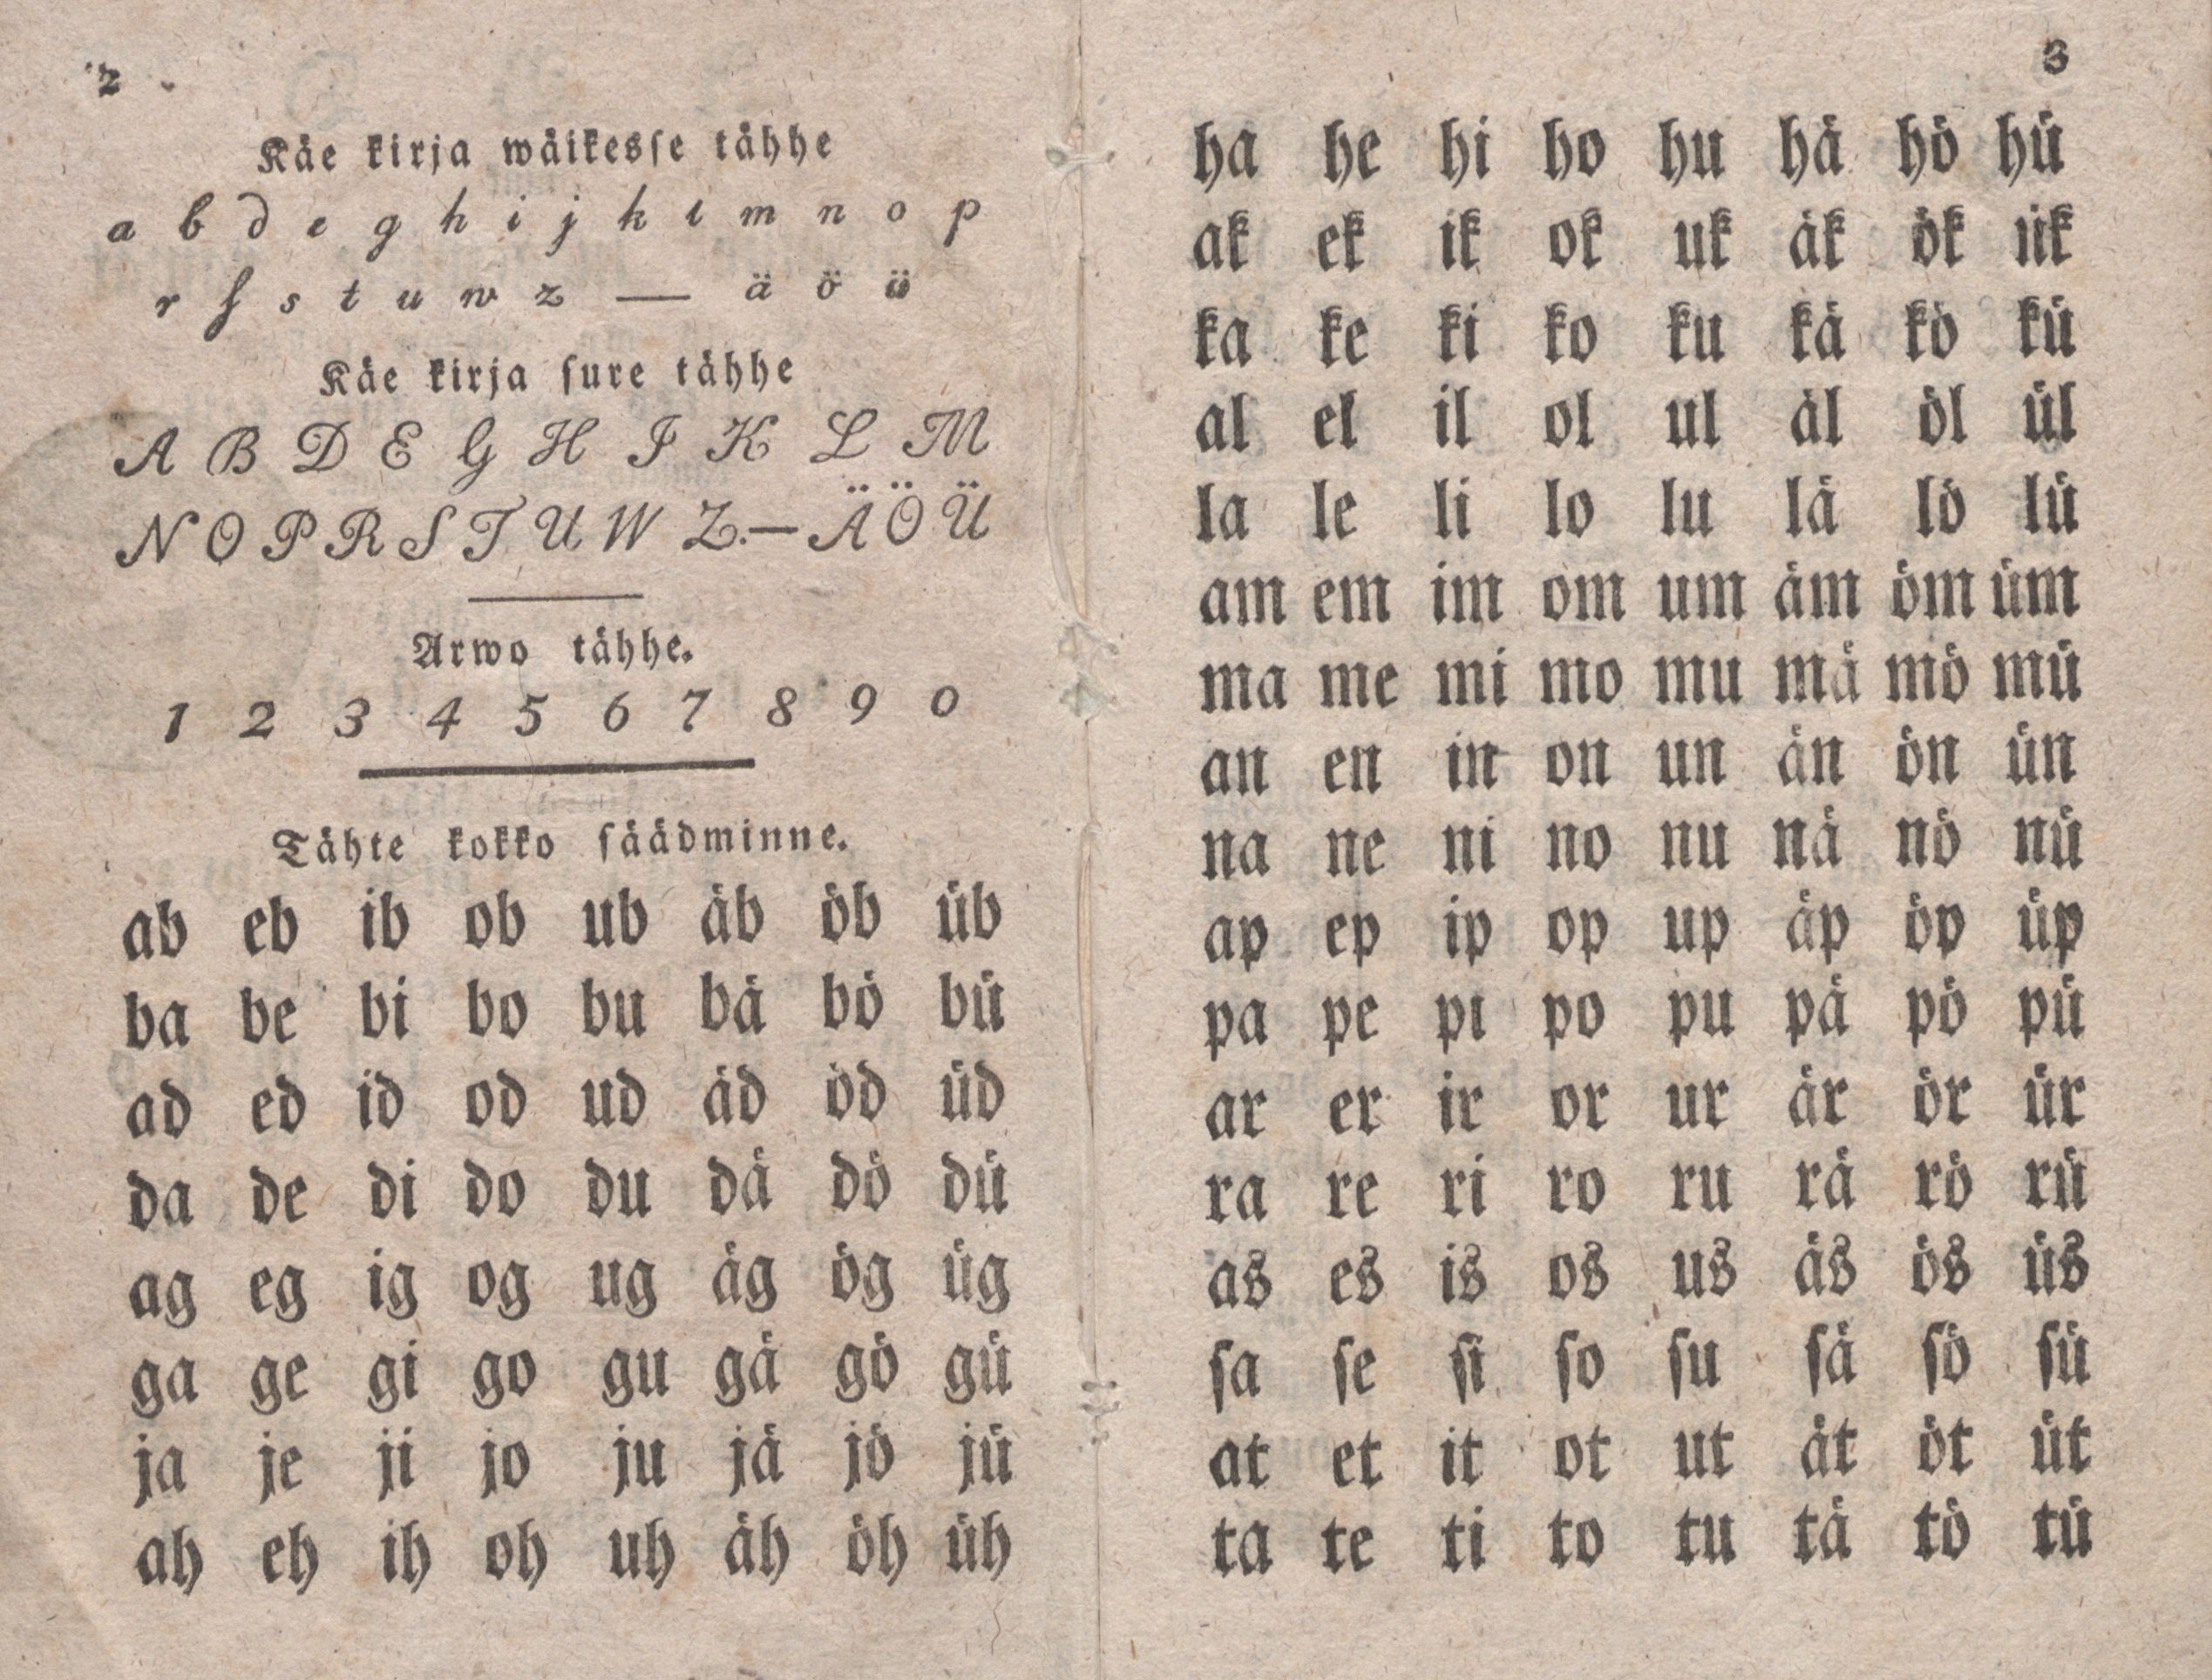 ABD nink wäikenne luggemisse ramat (1815) | 3. (2-3) Haupttext